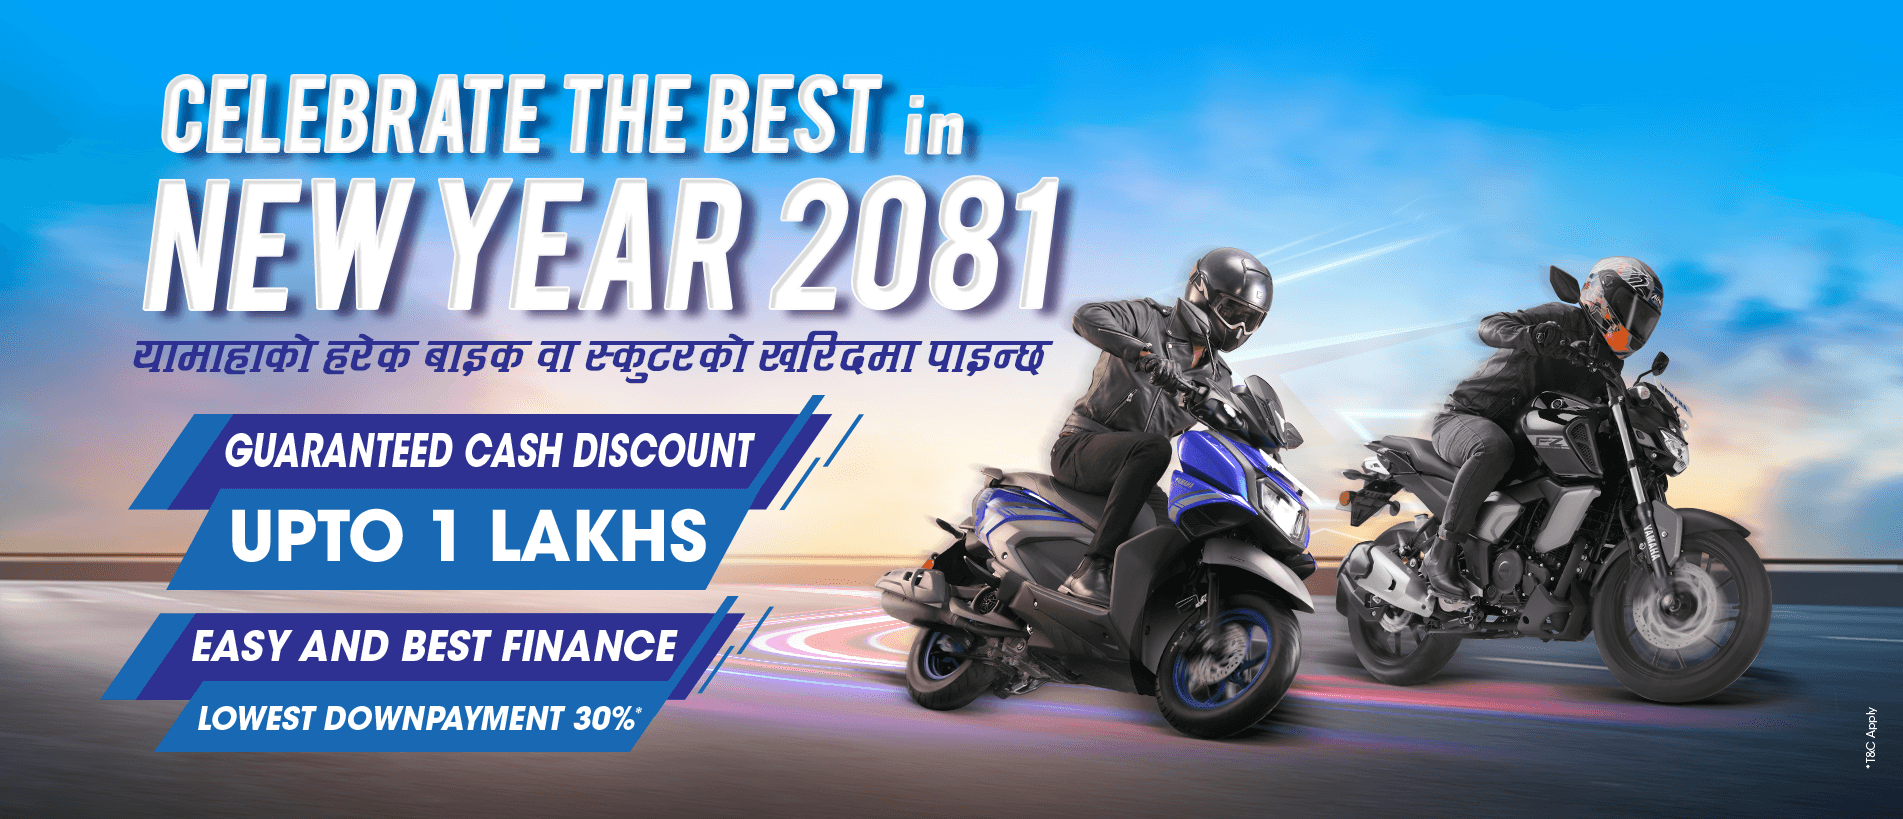 Yamaha New Year Offer 2081